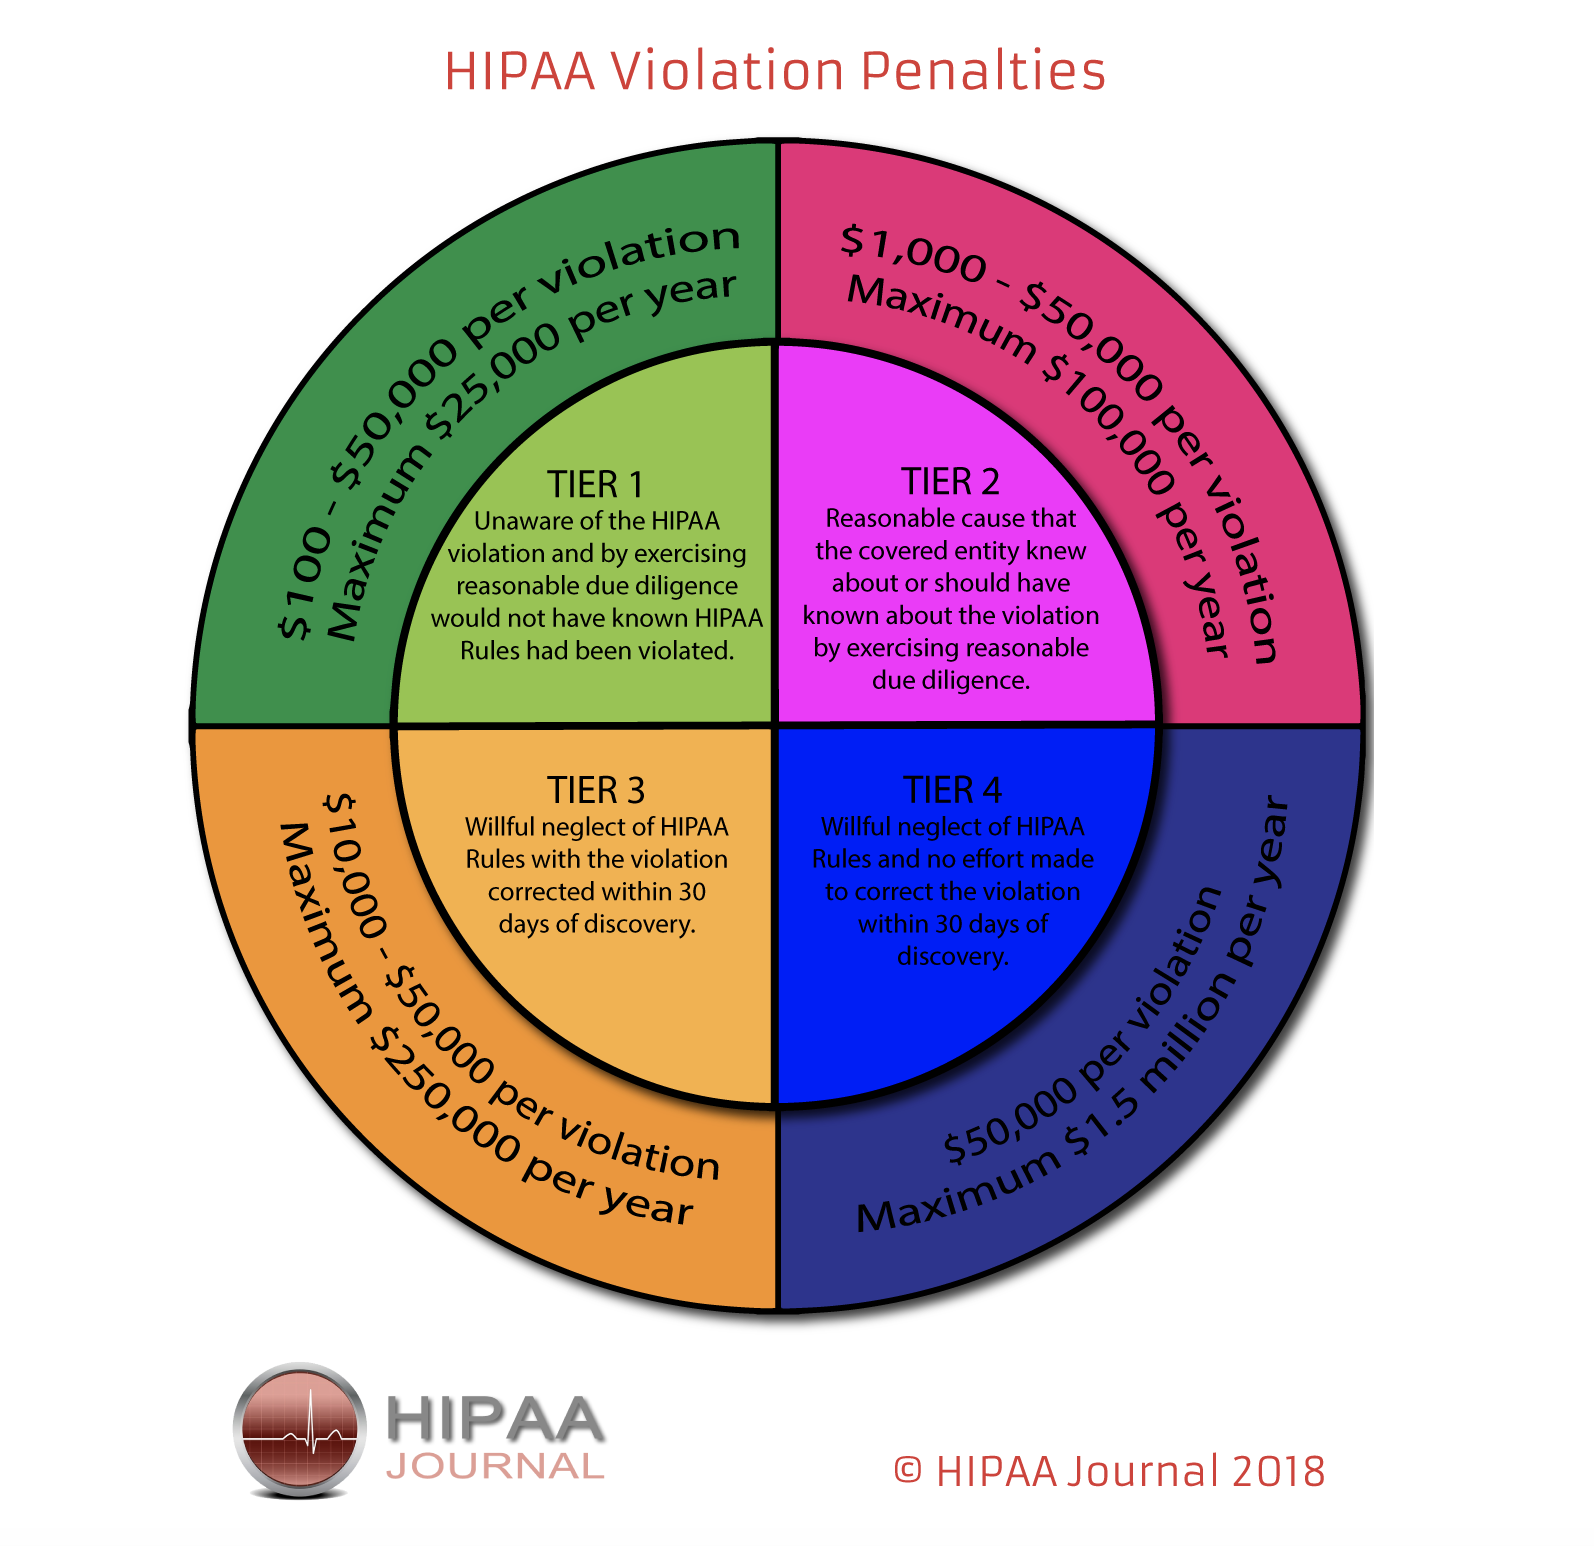 HIPPA Violation Penalties